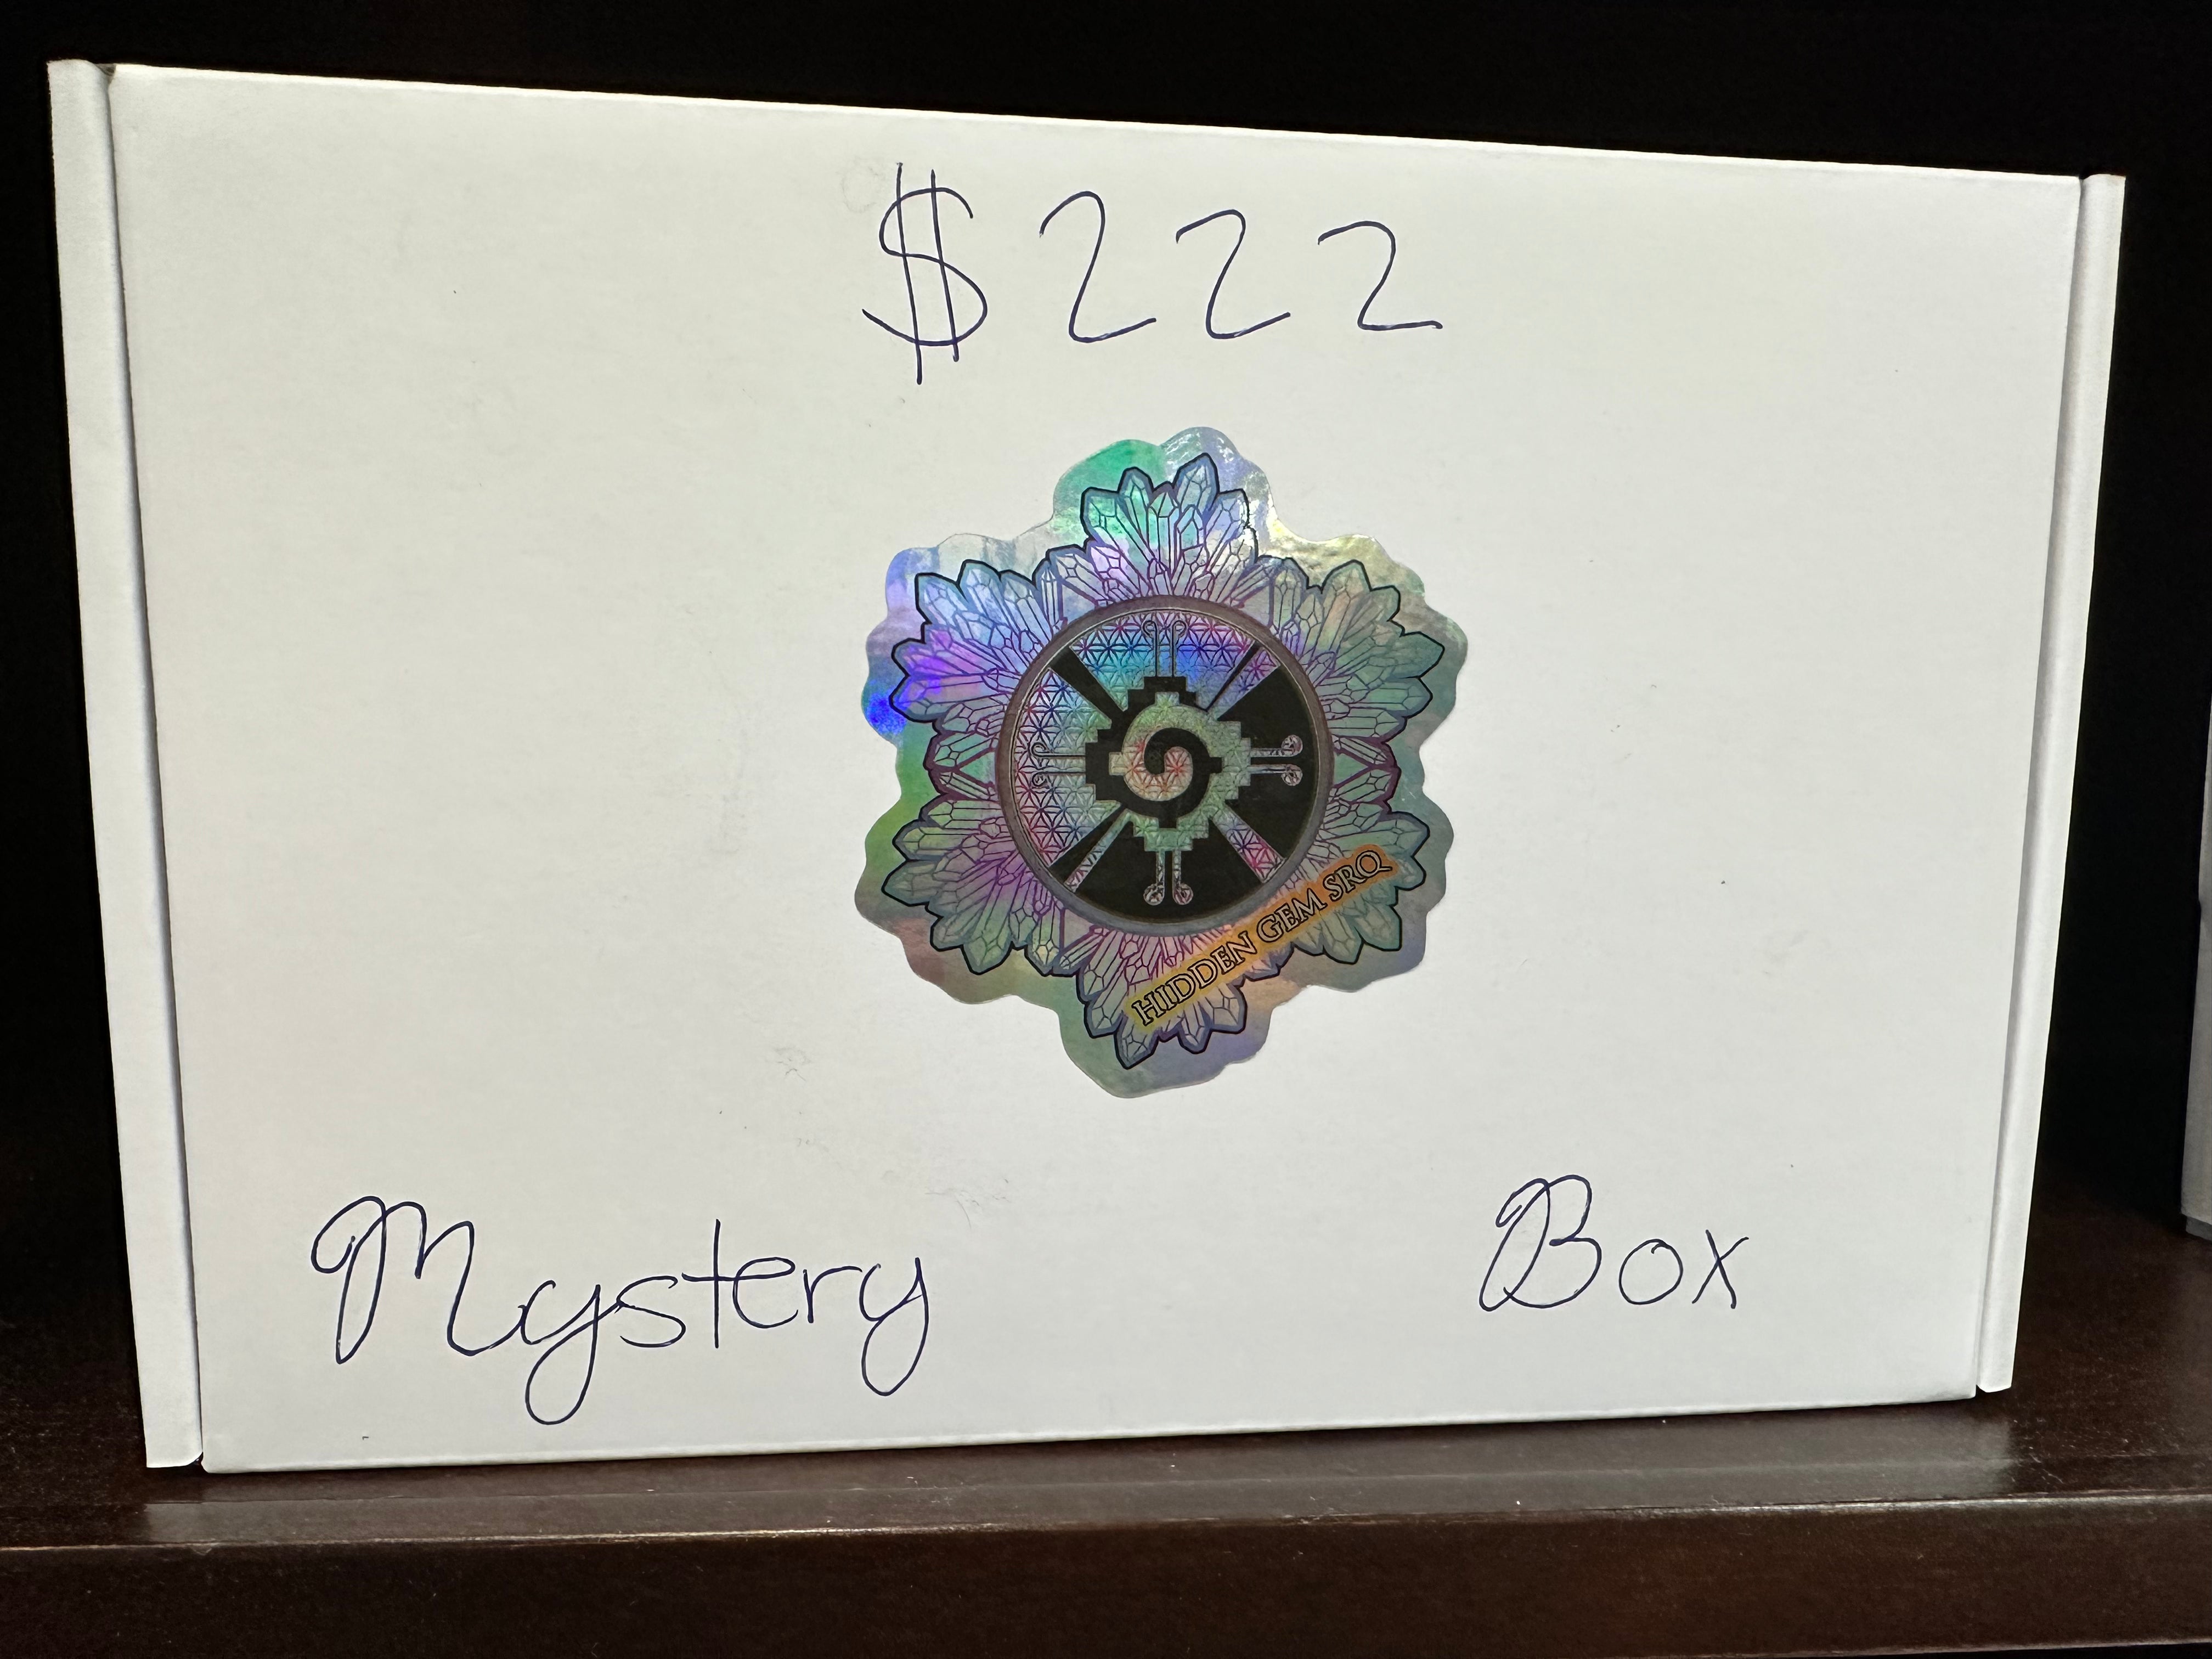 $222 Mystery Box – Hidden Gem SRQ LLC